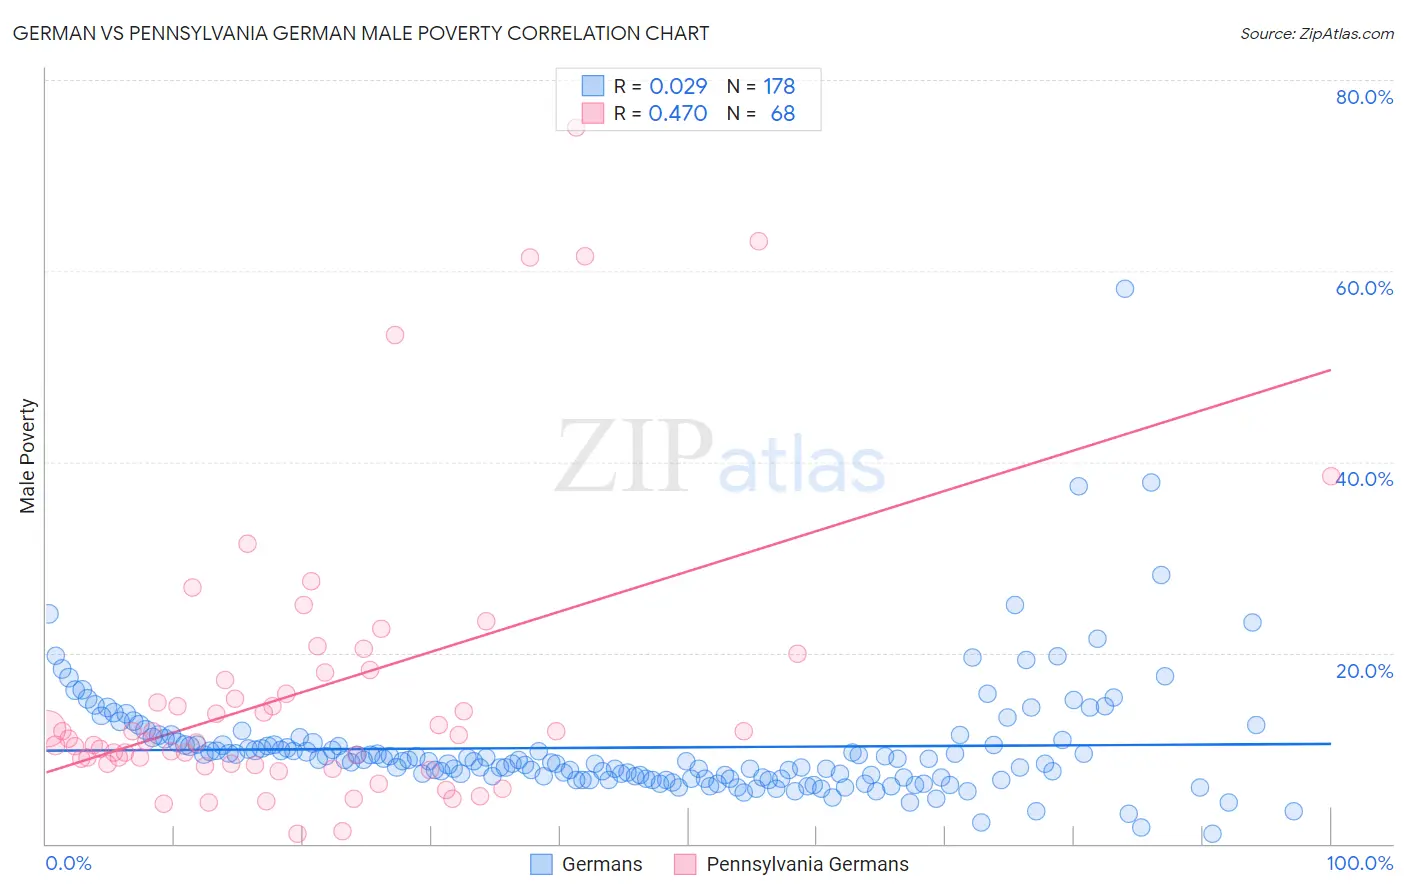 German vs Pennsylvania German Male Poverty